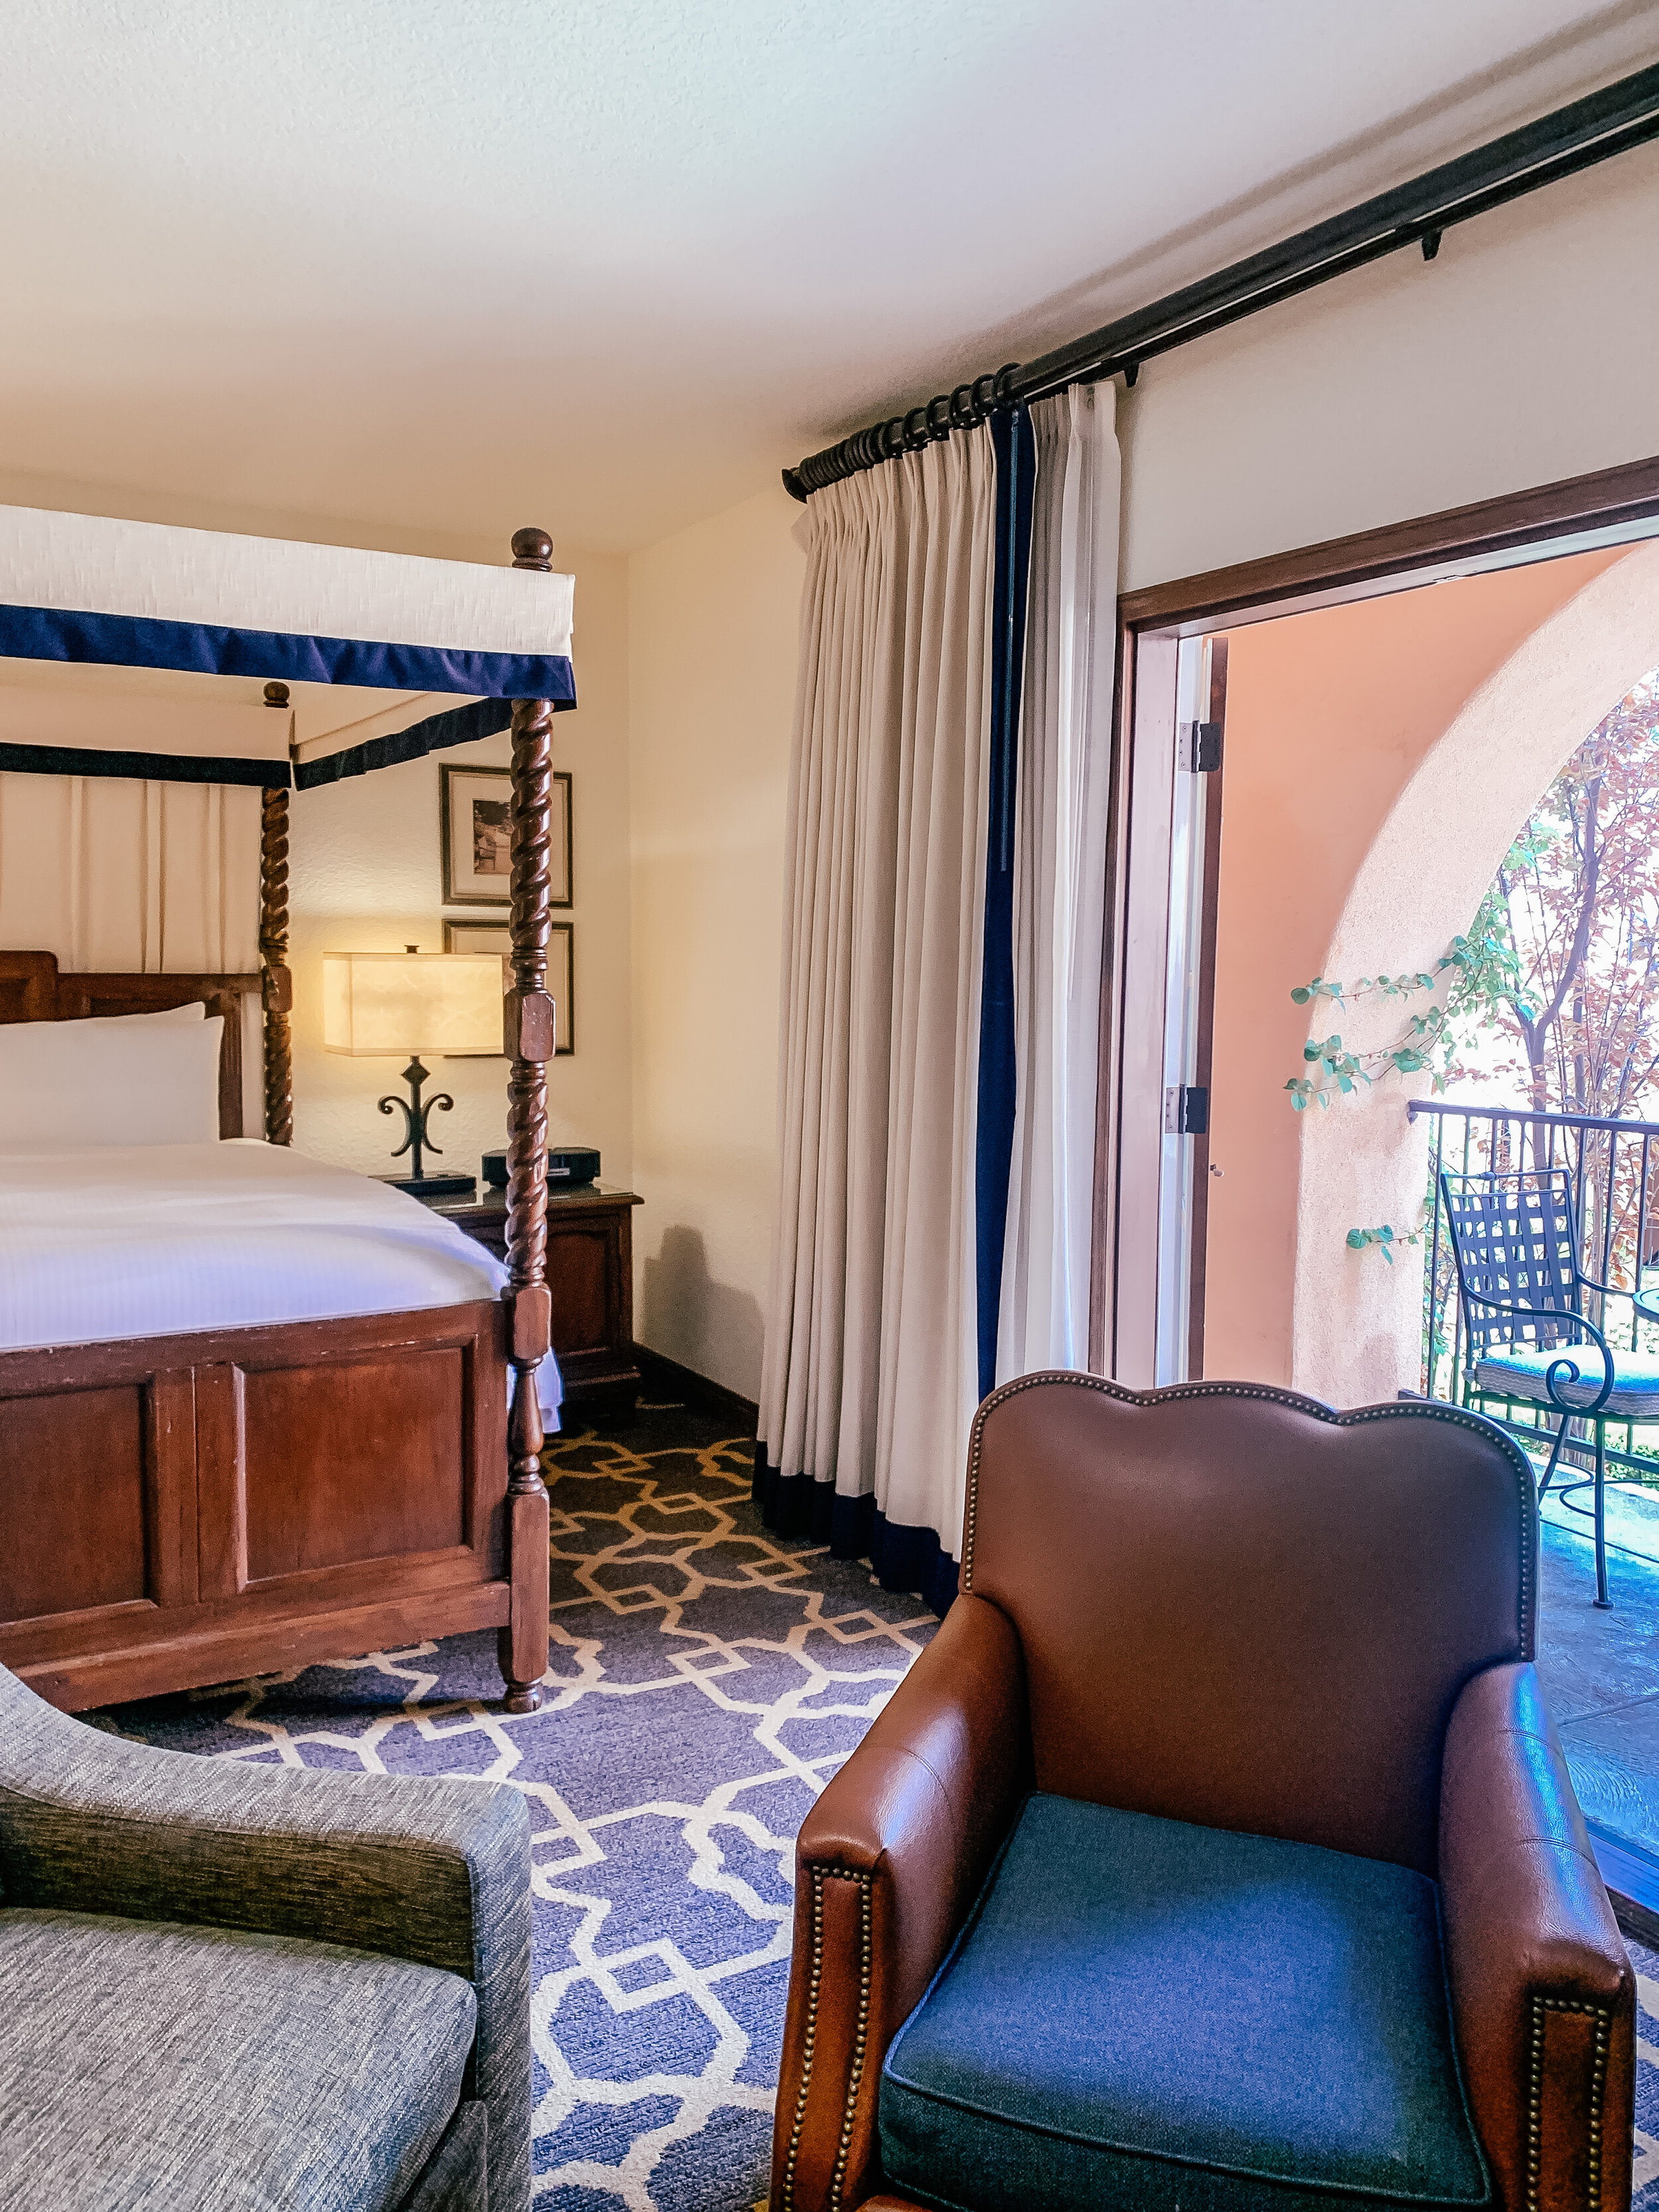 Fairmont Sonoma Mission Inn & Spa Review  - Rooms at the Fairmont Sonoma - Mission Suite - 5 star luxury hotel sonoma.JPG